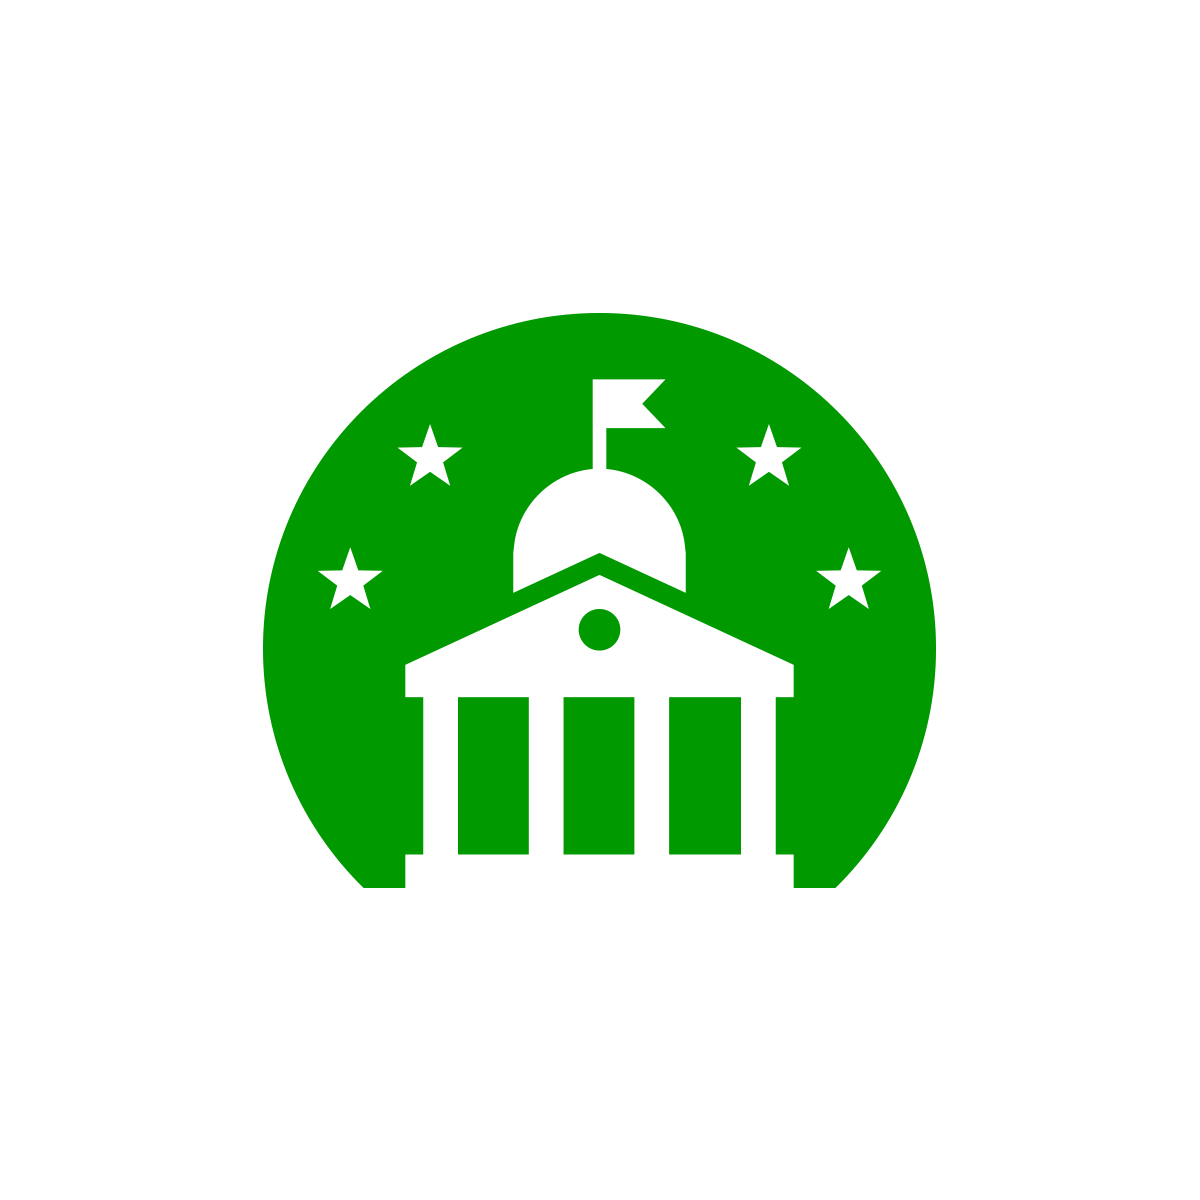 ELGL green icon